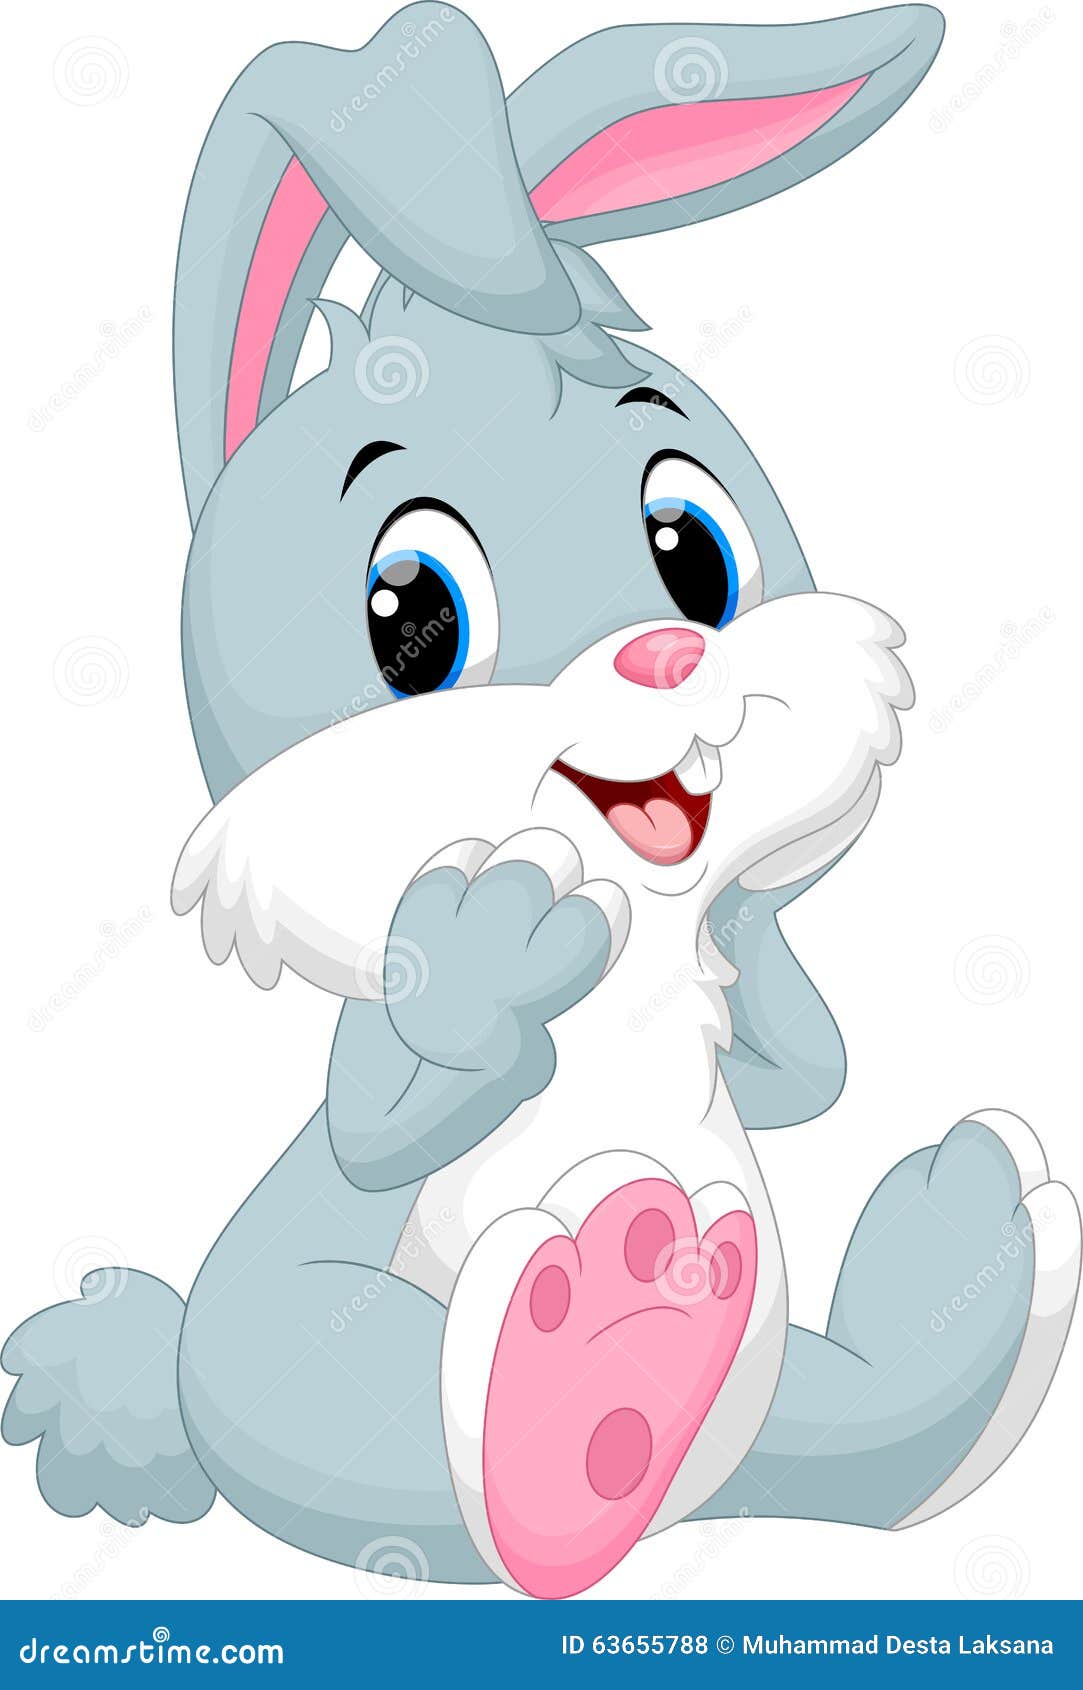 Cute Rabbit Cartoon Stock Illustration - Image: 63655788